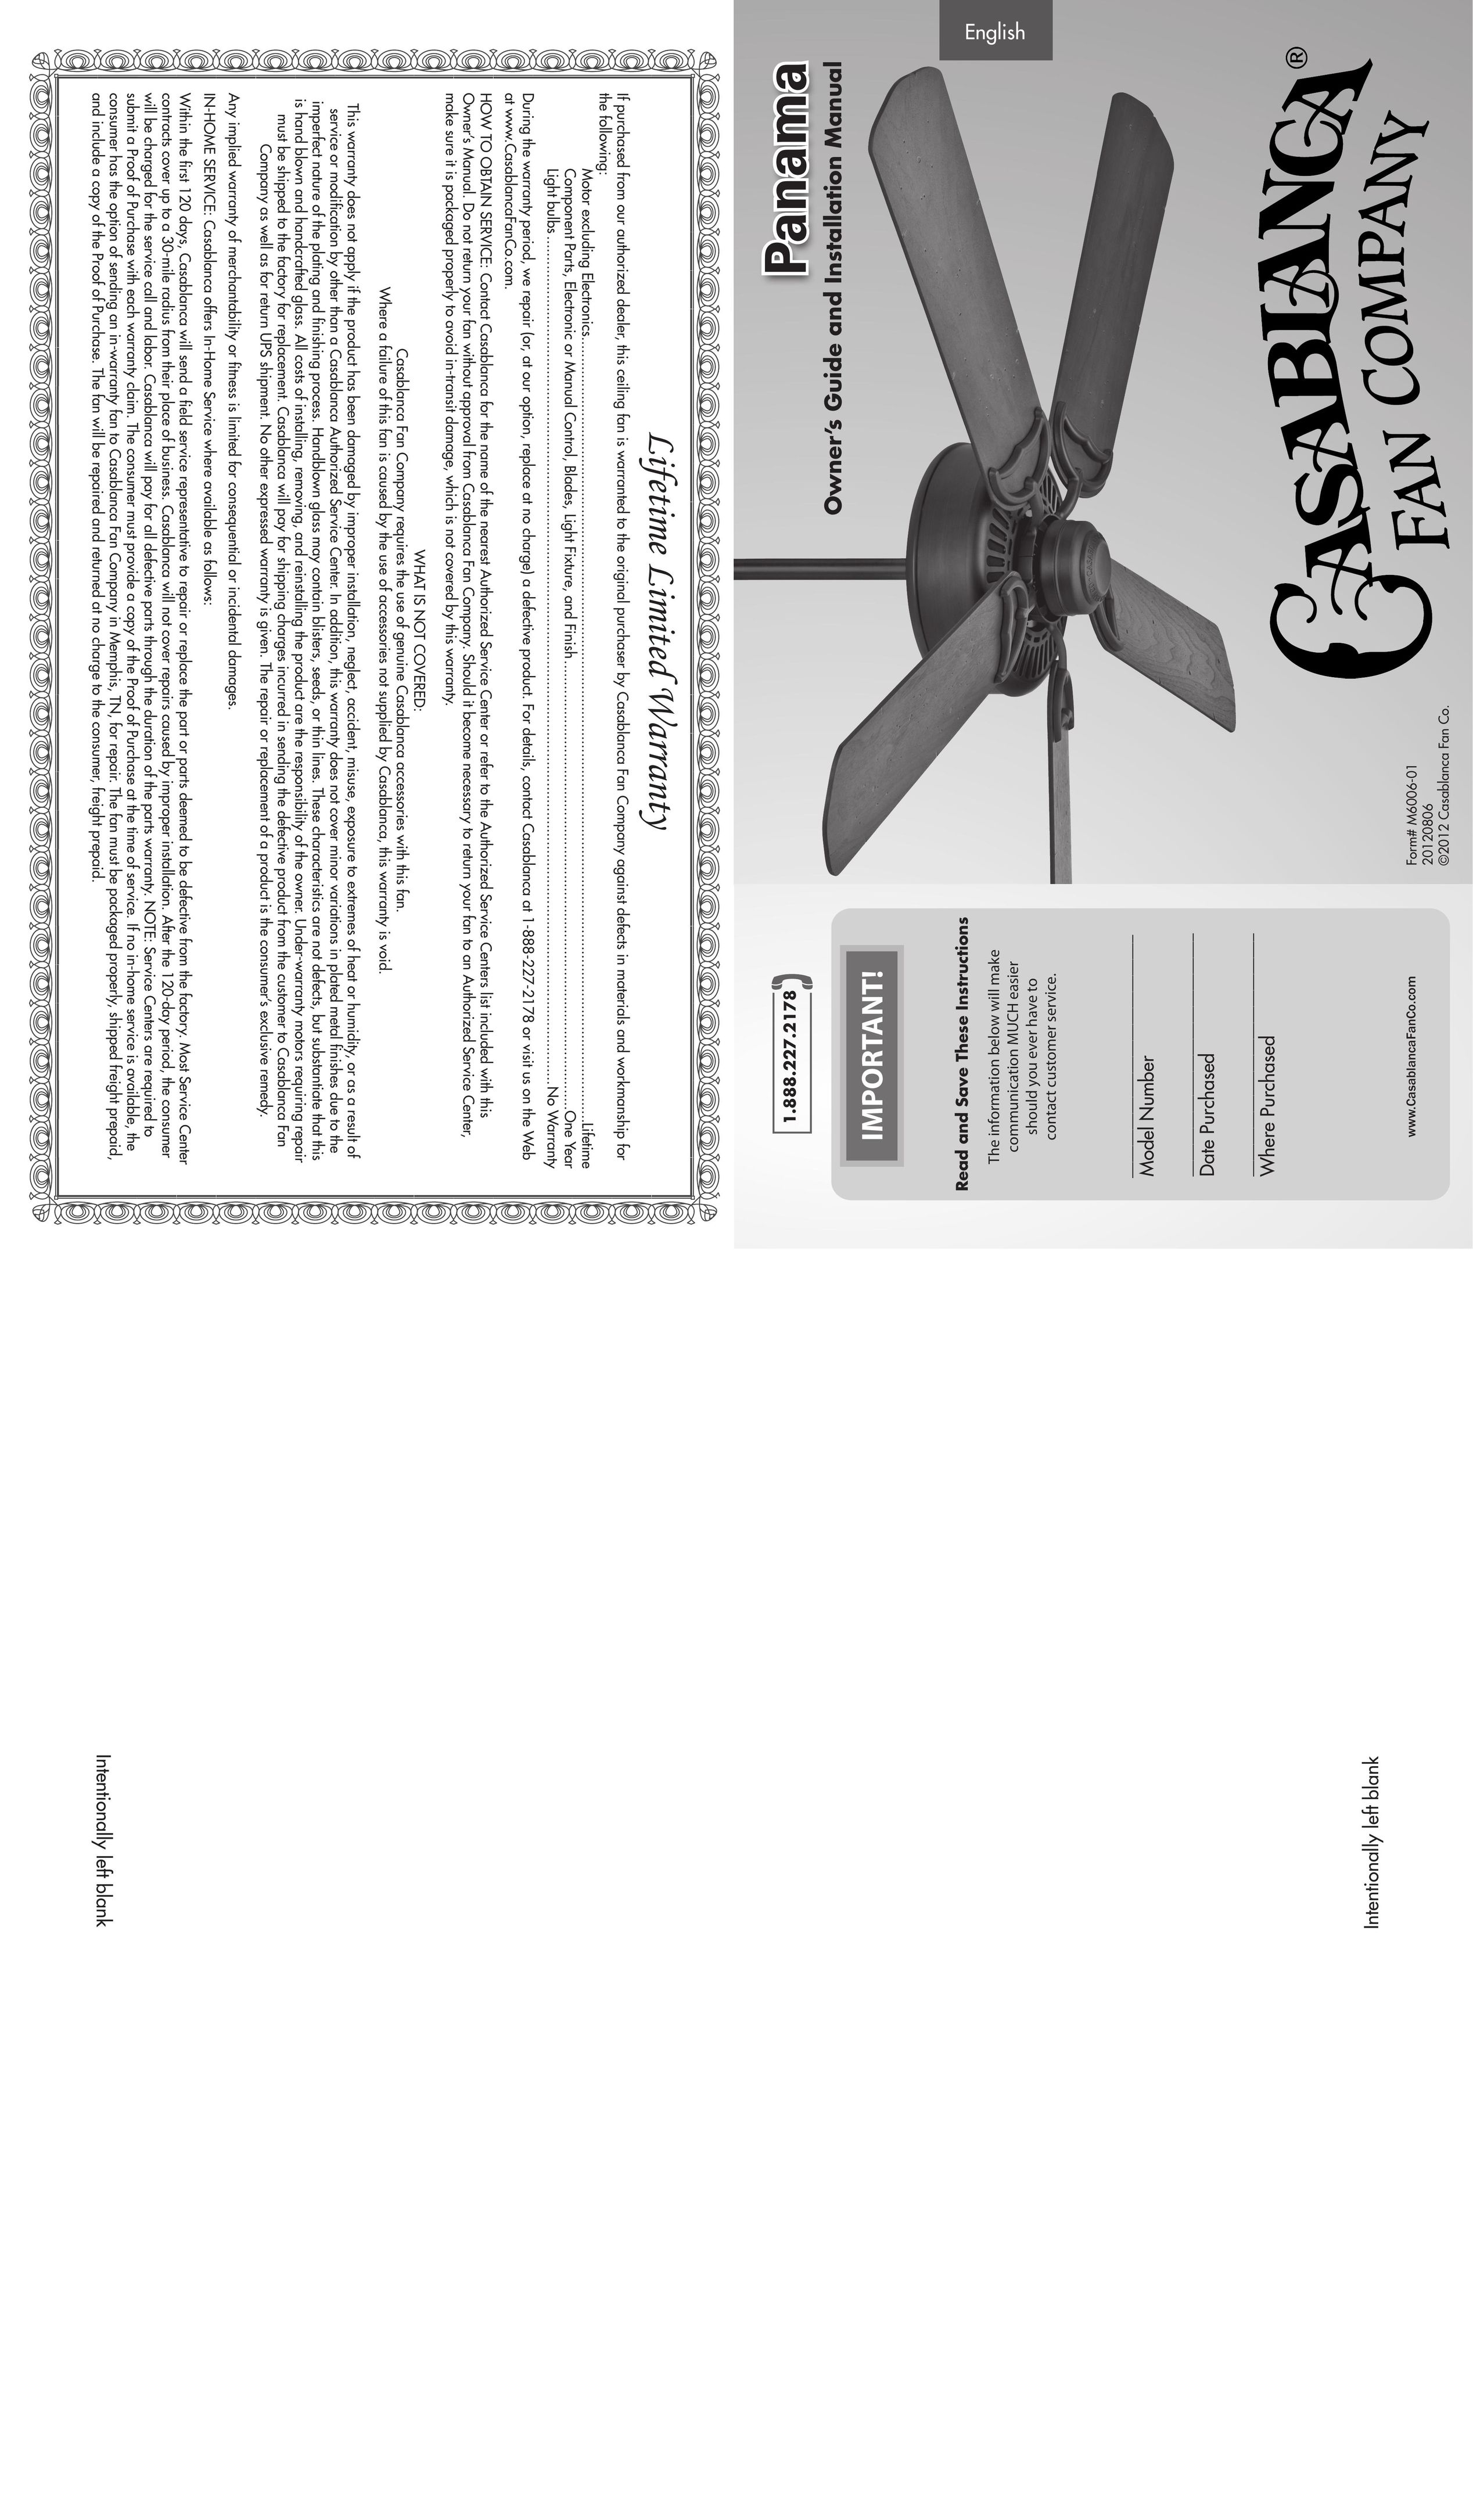 Casablanca Fan Company 59511 Pet Fence User Manual